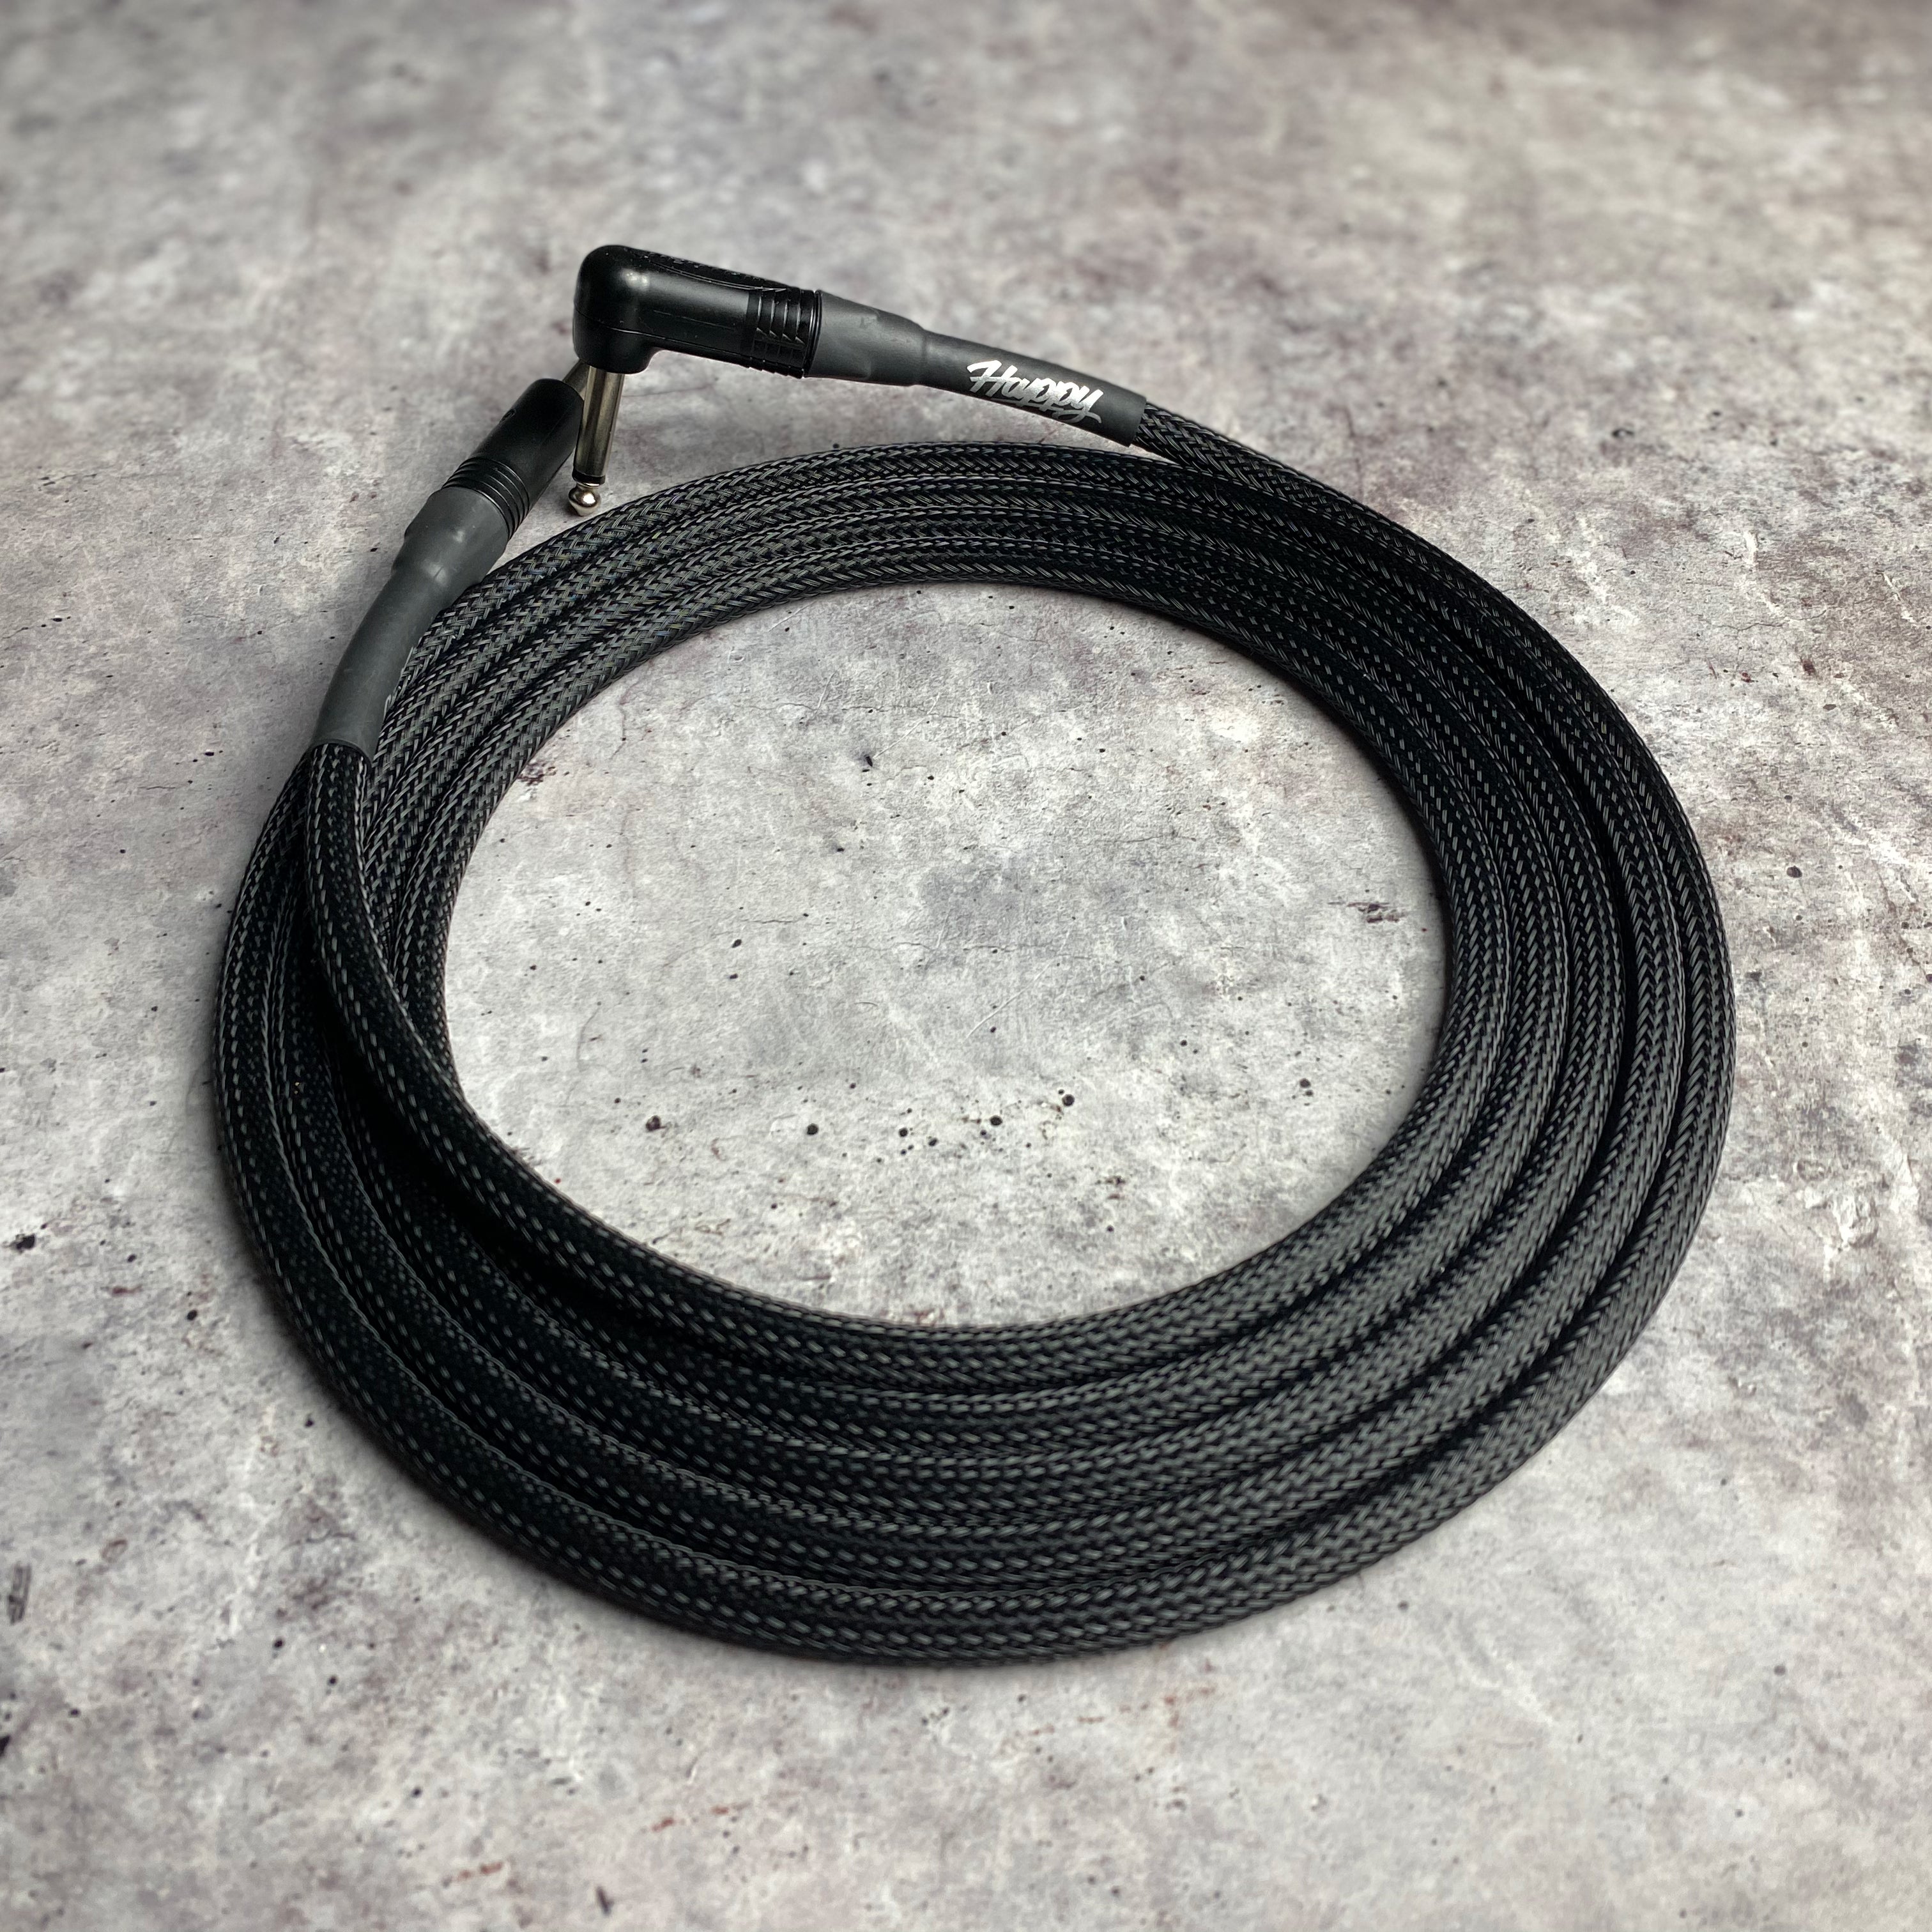 The Elite Instrument Cable - Black